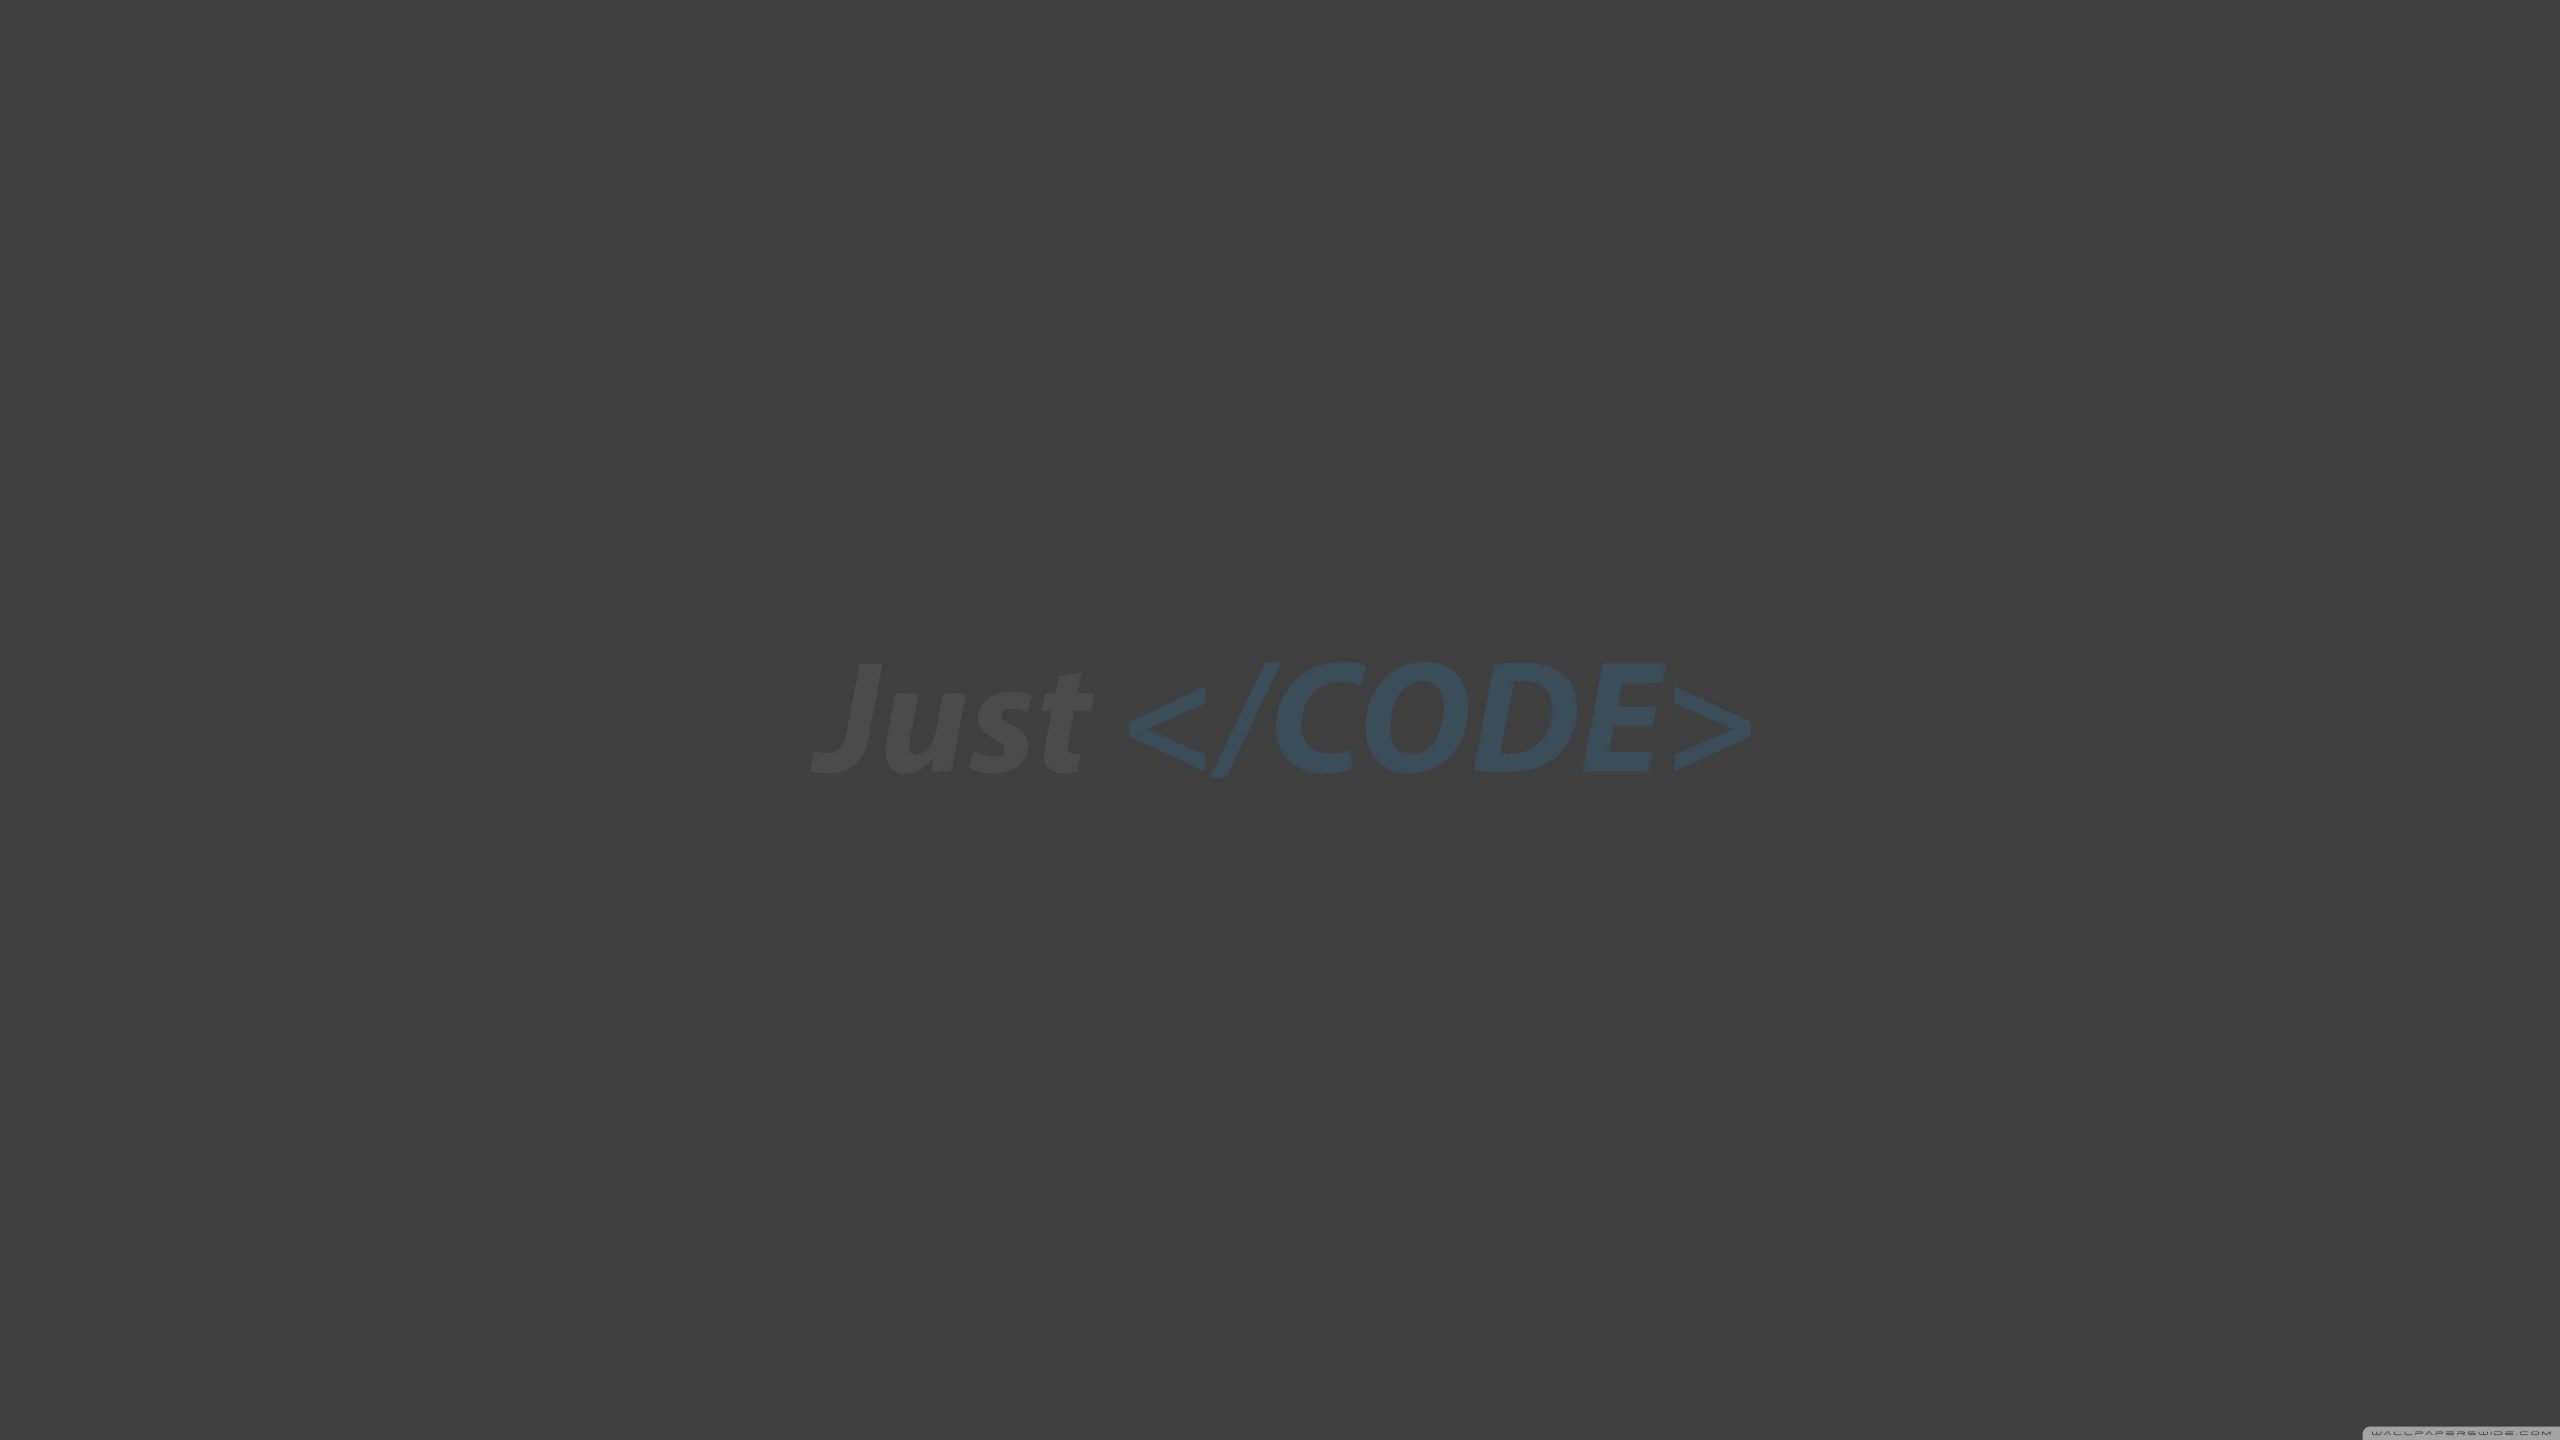 Coding Wallpaper, Just Code